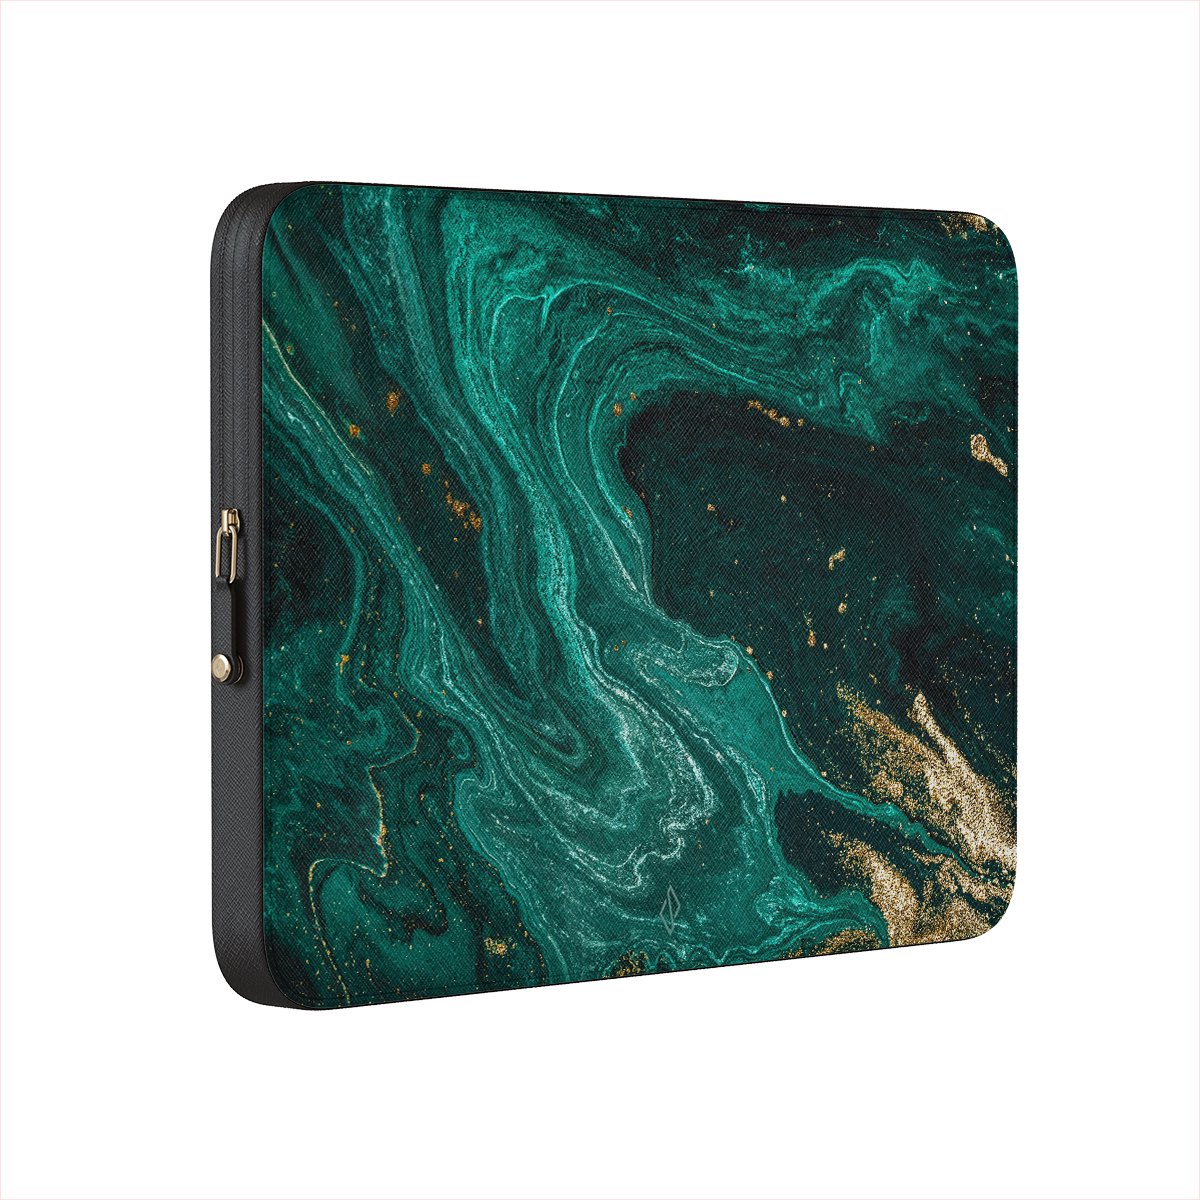 BURGA Laptophoes - Leren Laptop Hoesjes - Laptopsleeve 16 inch - Emerald Pool